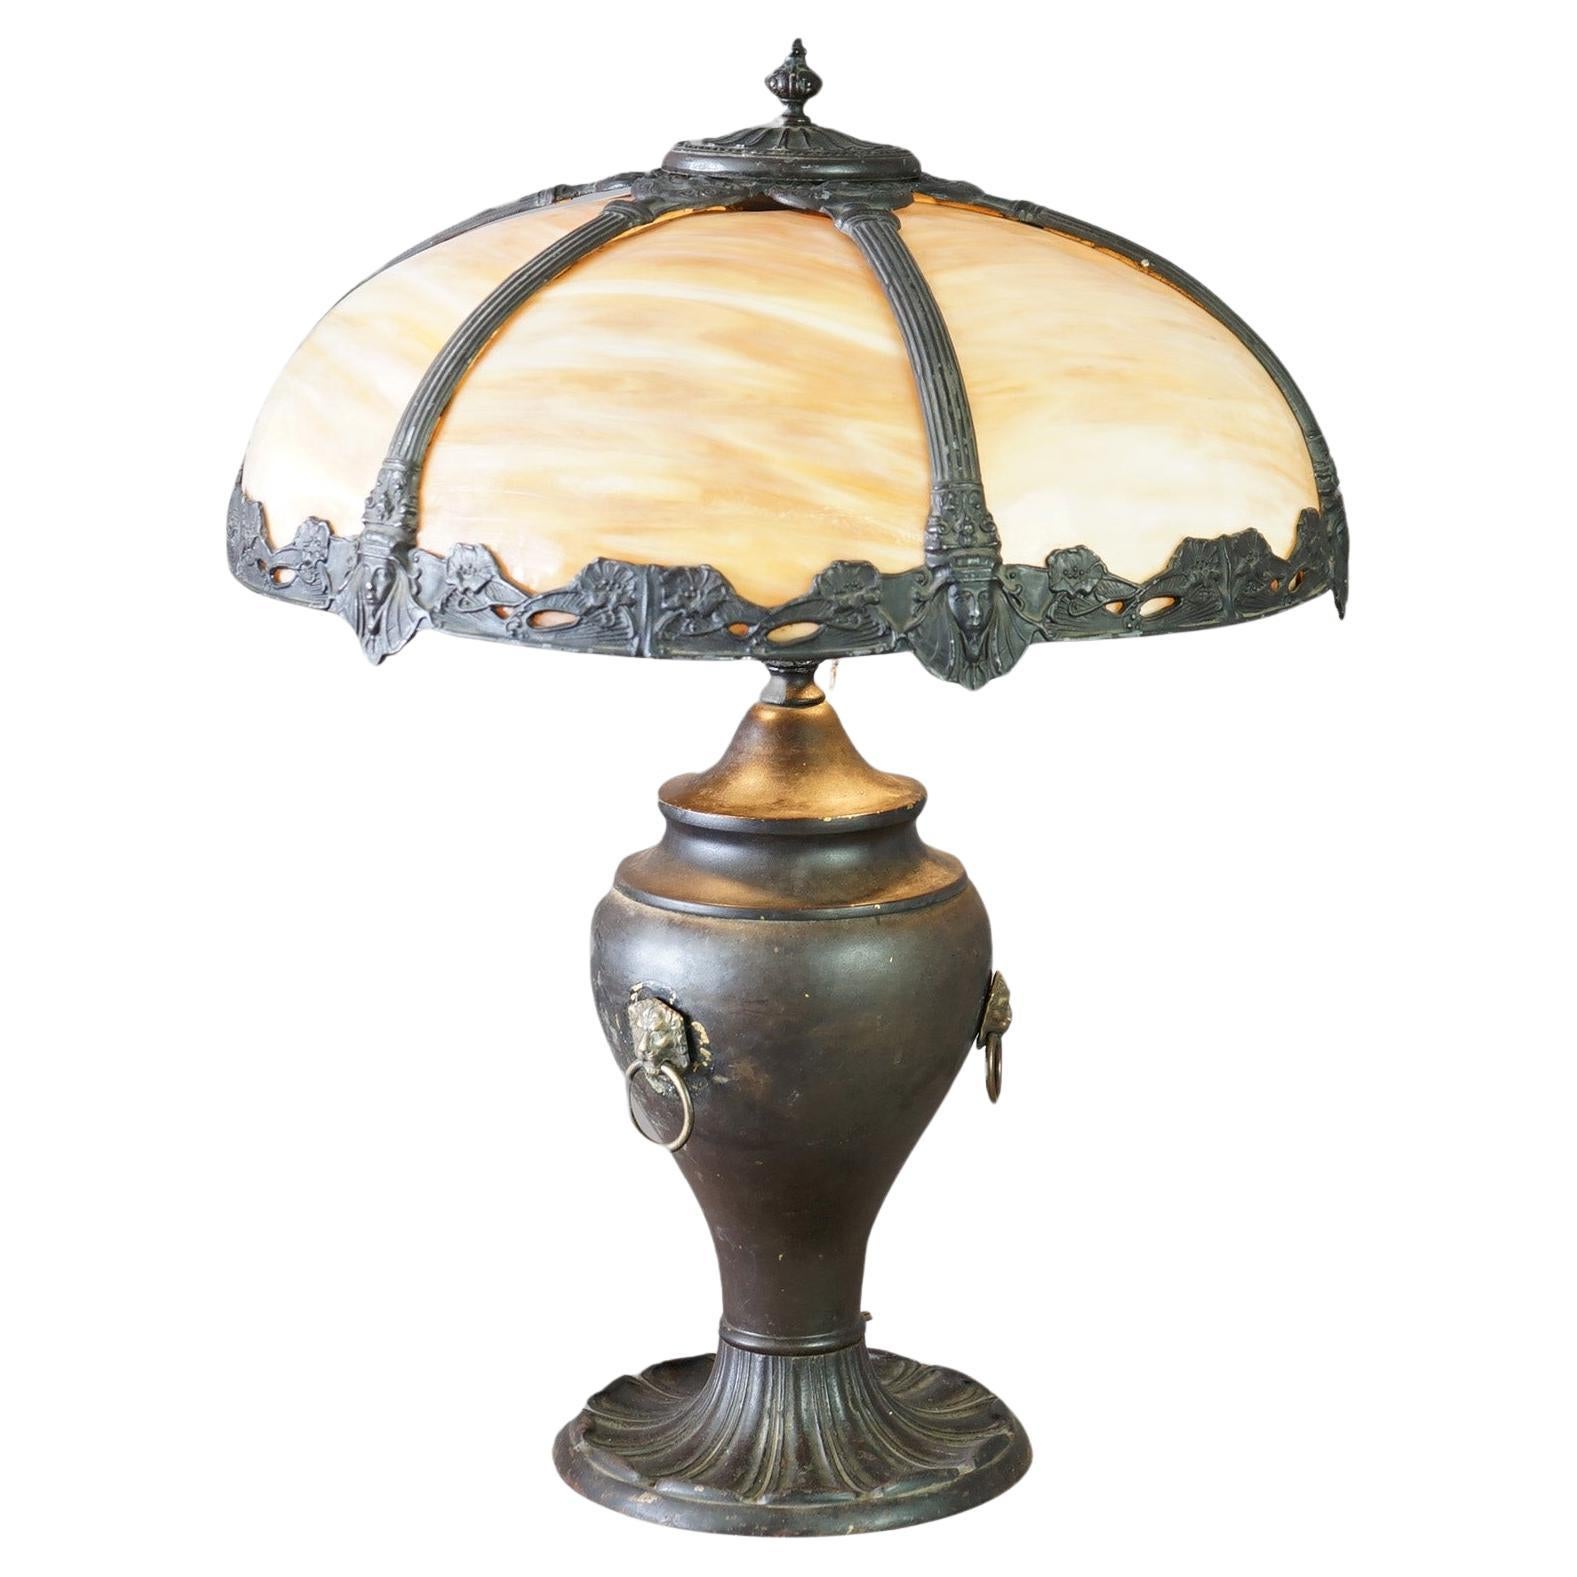 Antique Arts & Crafts Egyptian Revival Bradley &Hubbard School Slag Glass Lamp